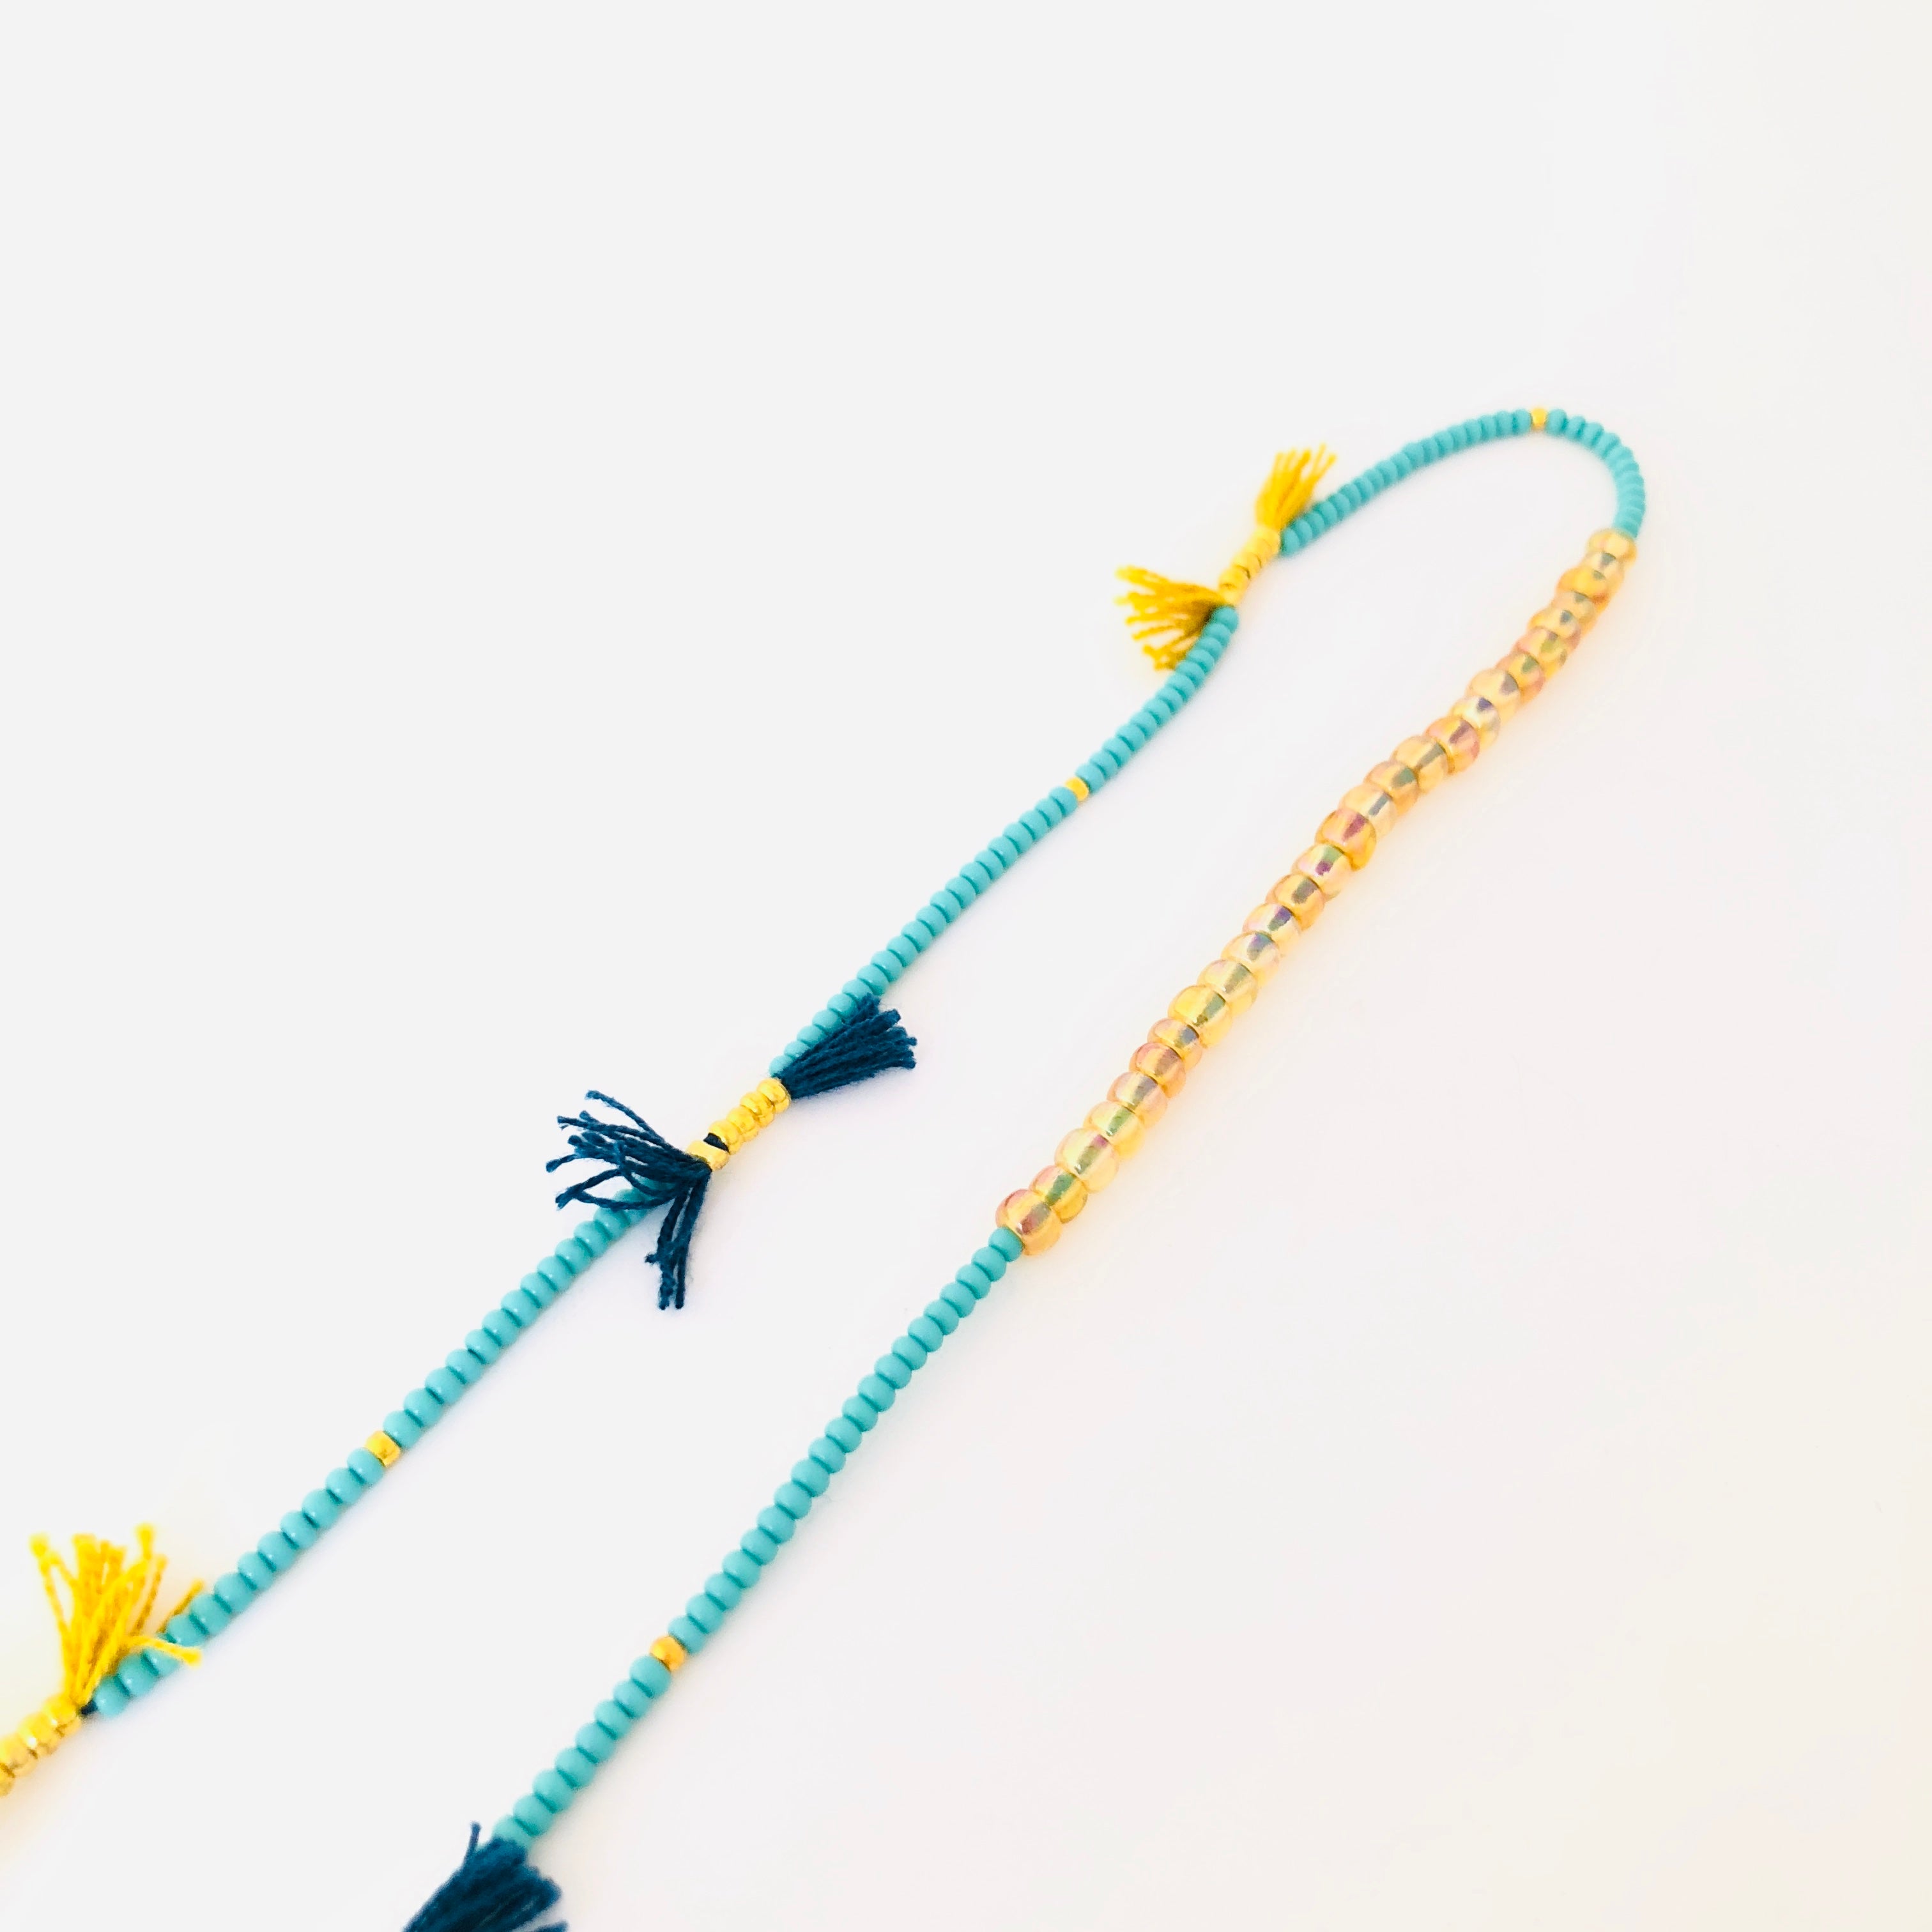 Bead and Tassel Necklace - Studio Maya 